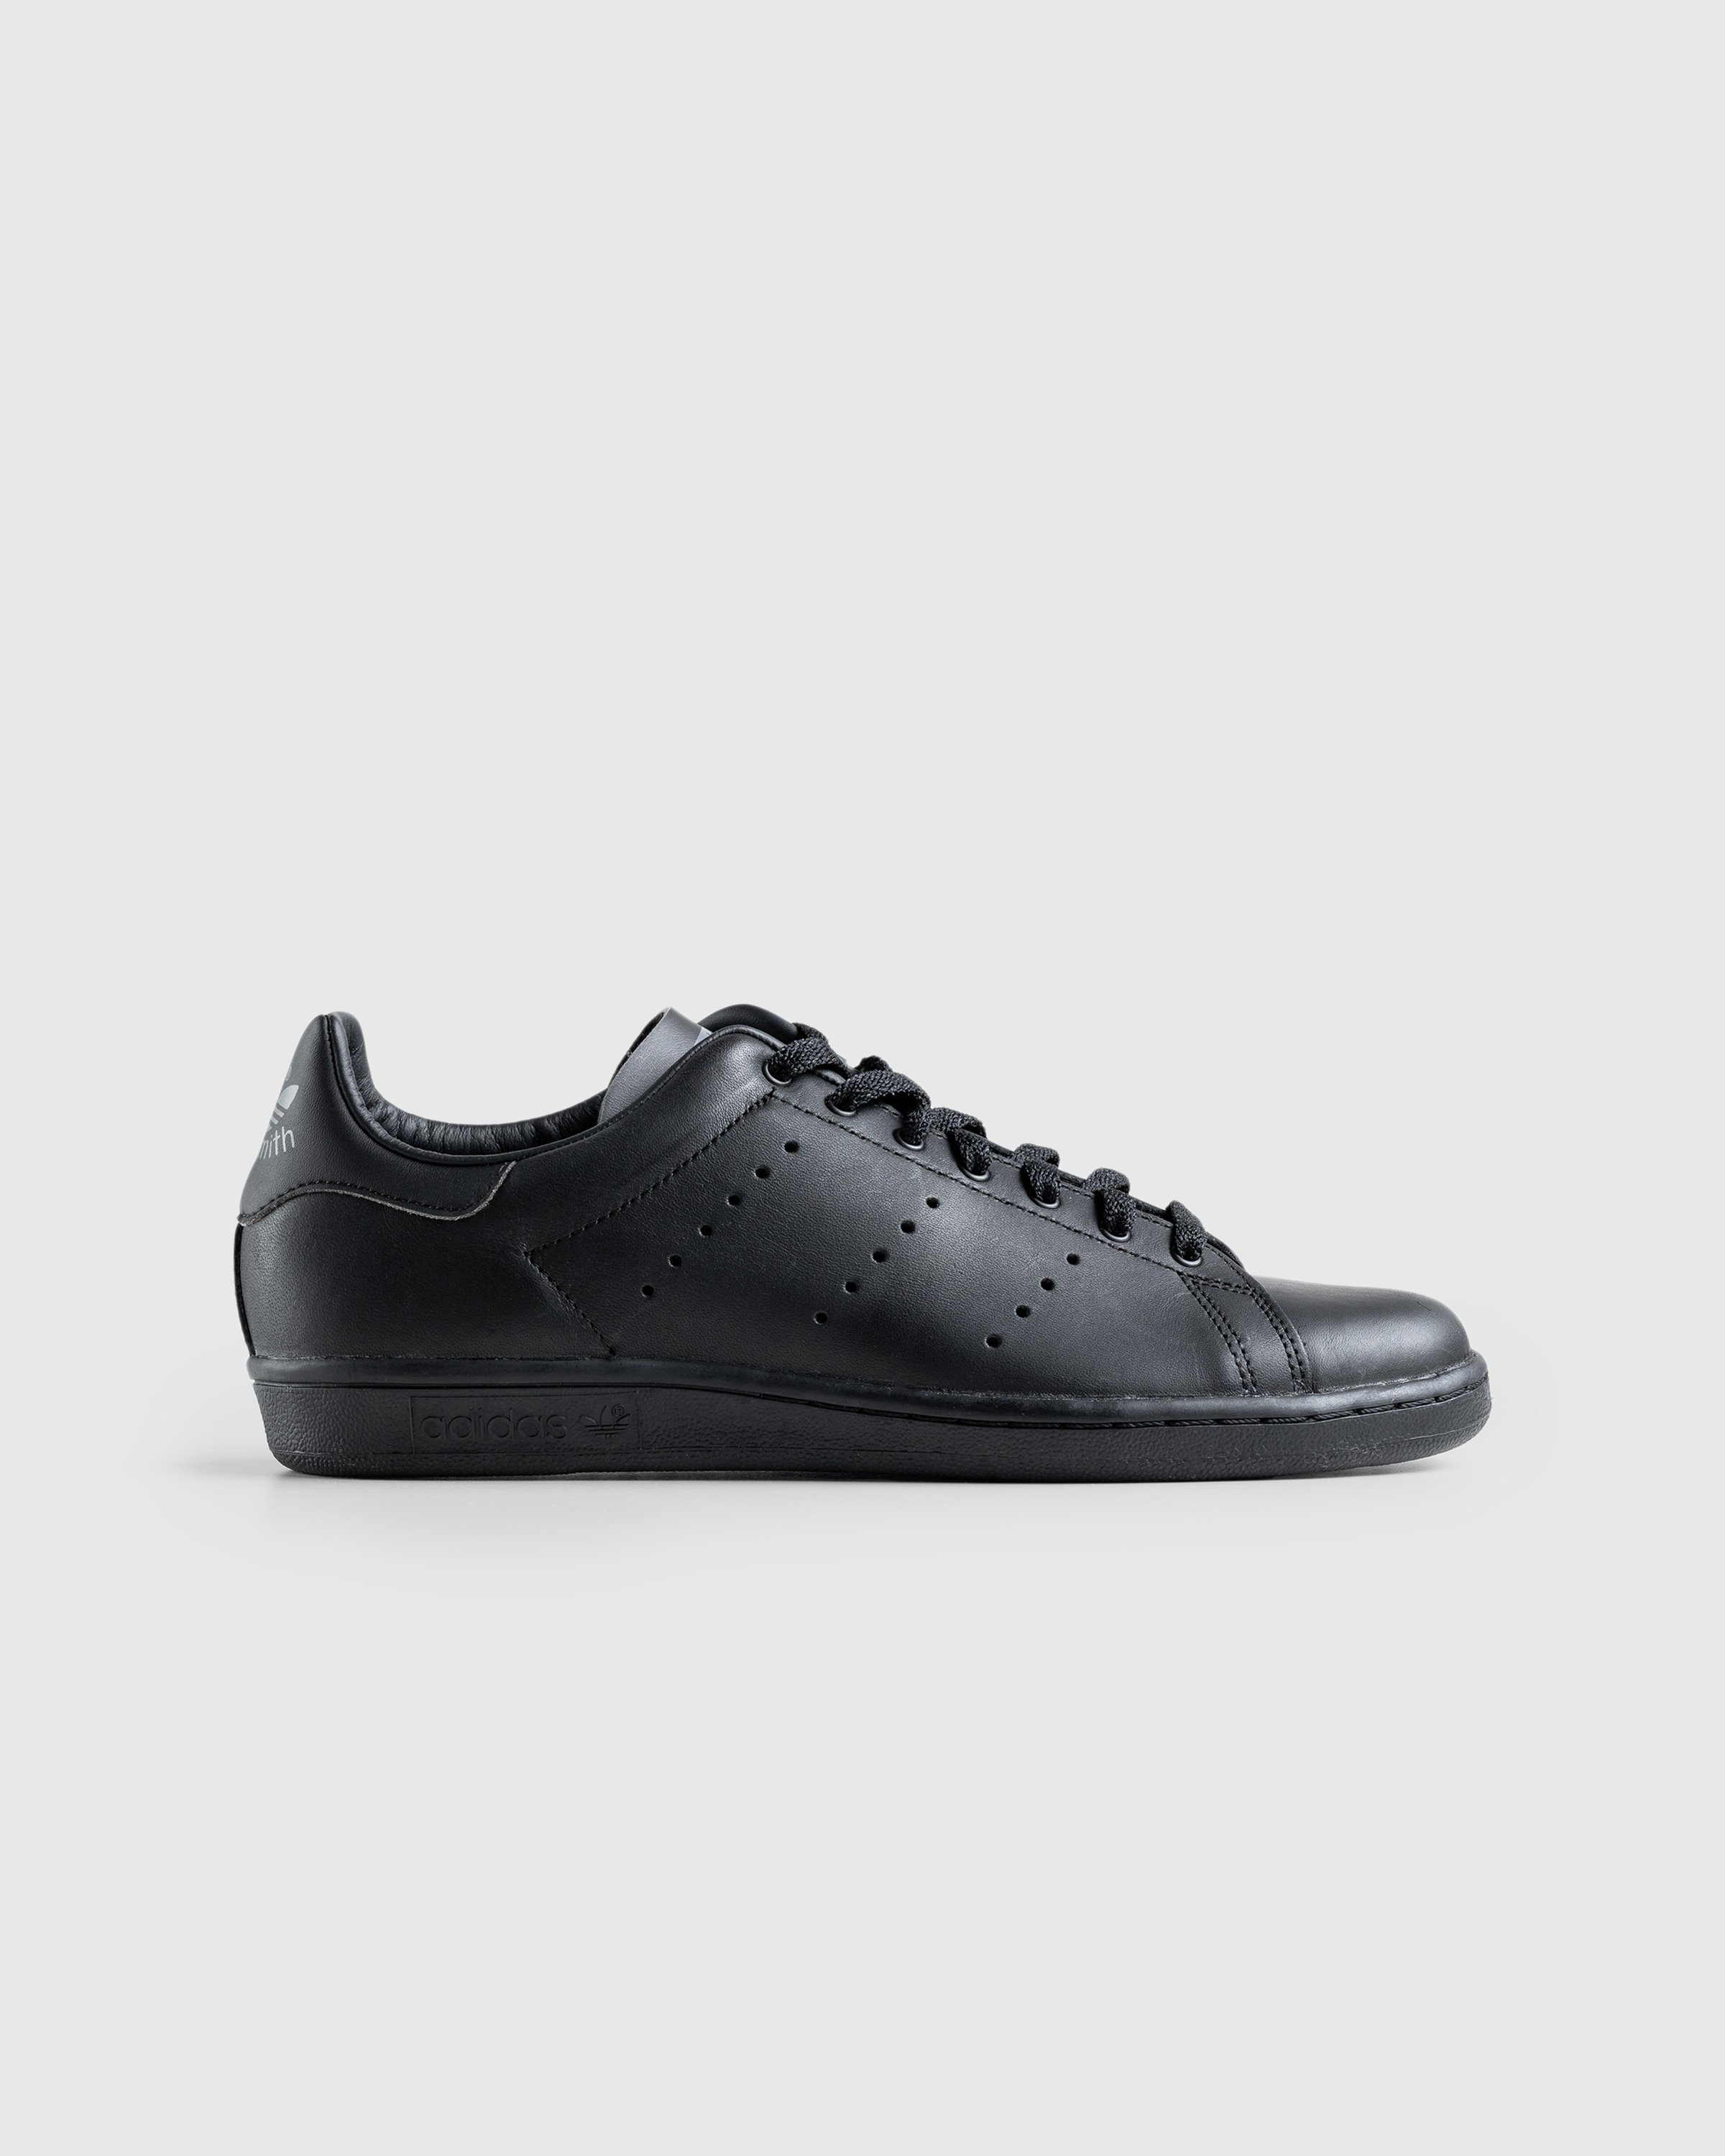 Adidas - Stan Smith 80s Black - Footwear - Black - Image 1